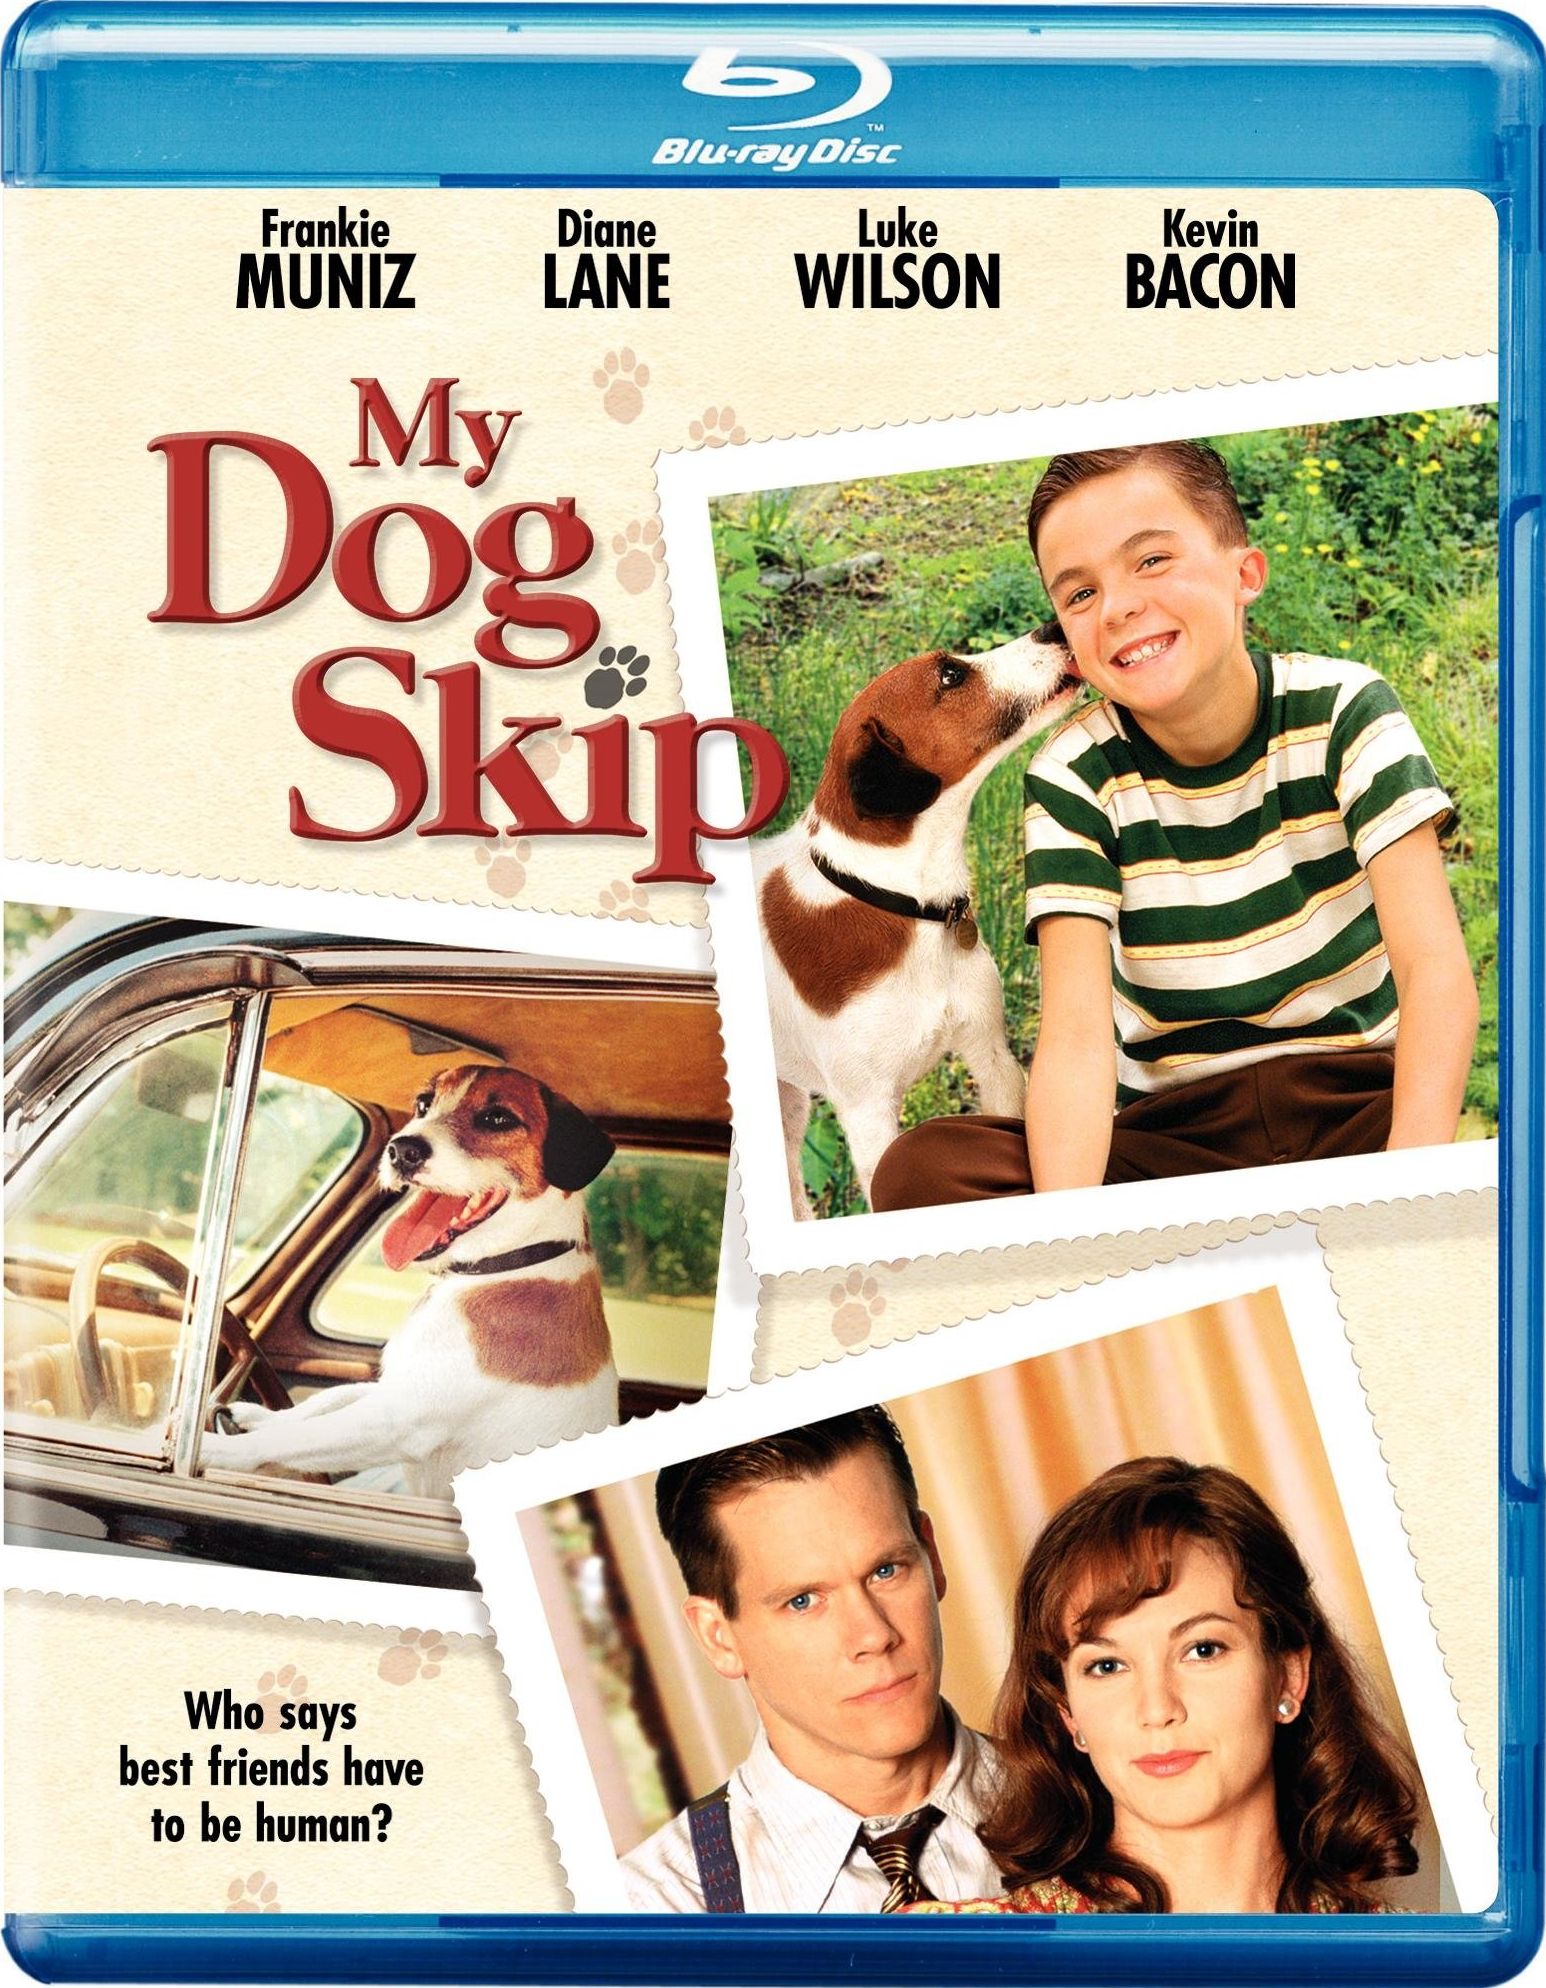 My Dog Skip DVD Release Date